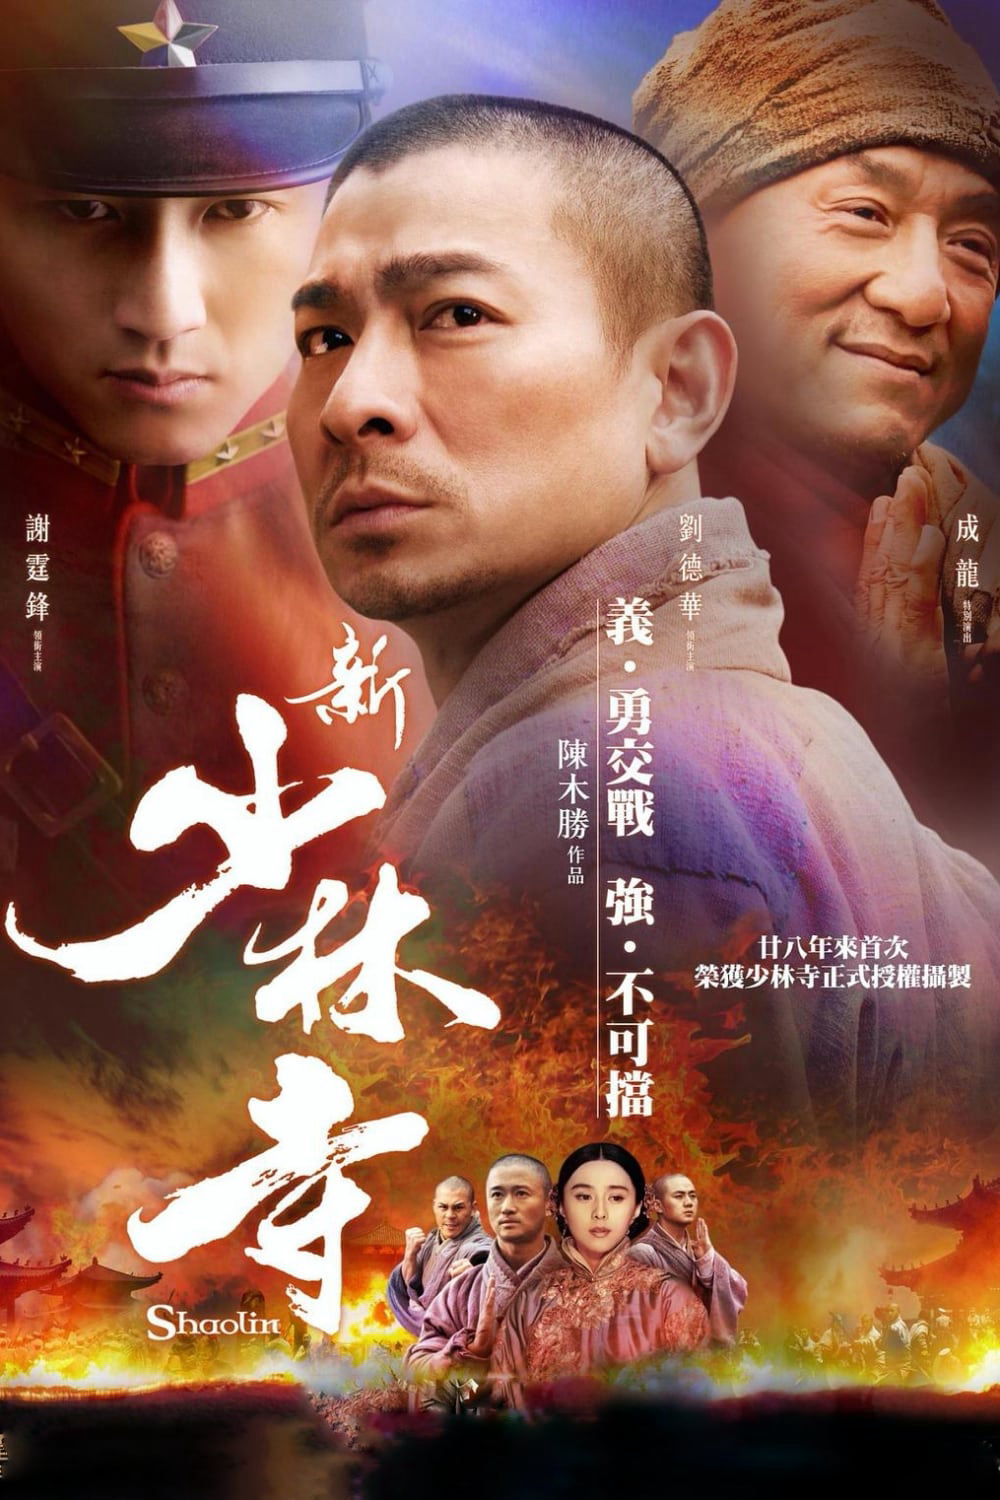 Xem Phim Tân Thiếu Lâm Tự - Shaolin (Shaolin)